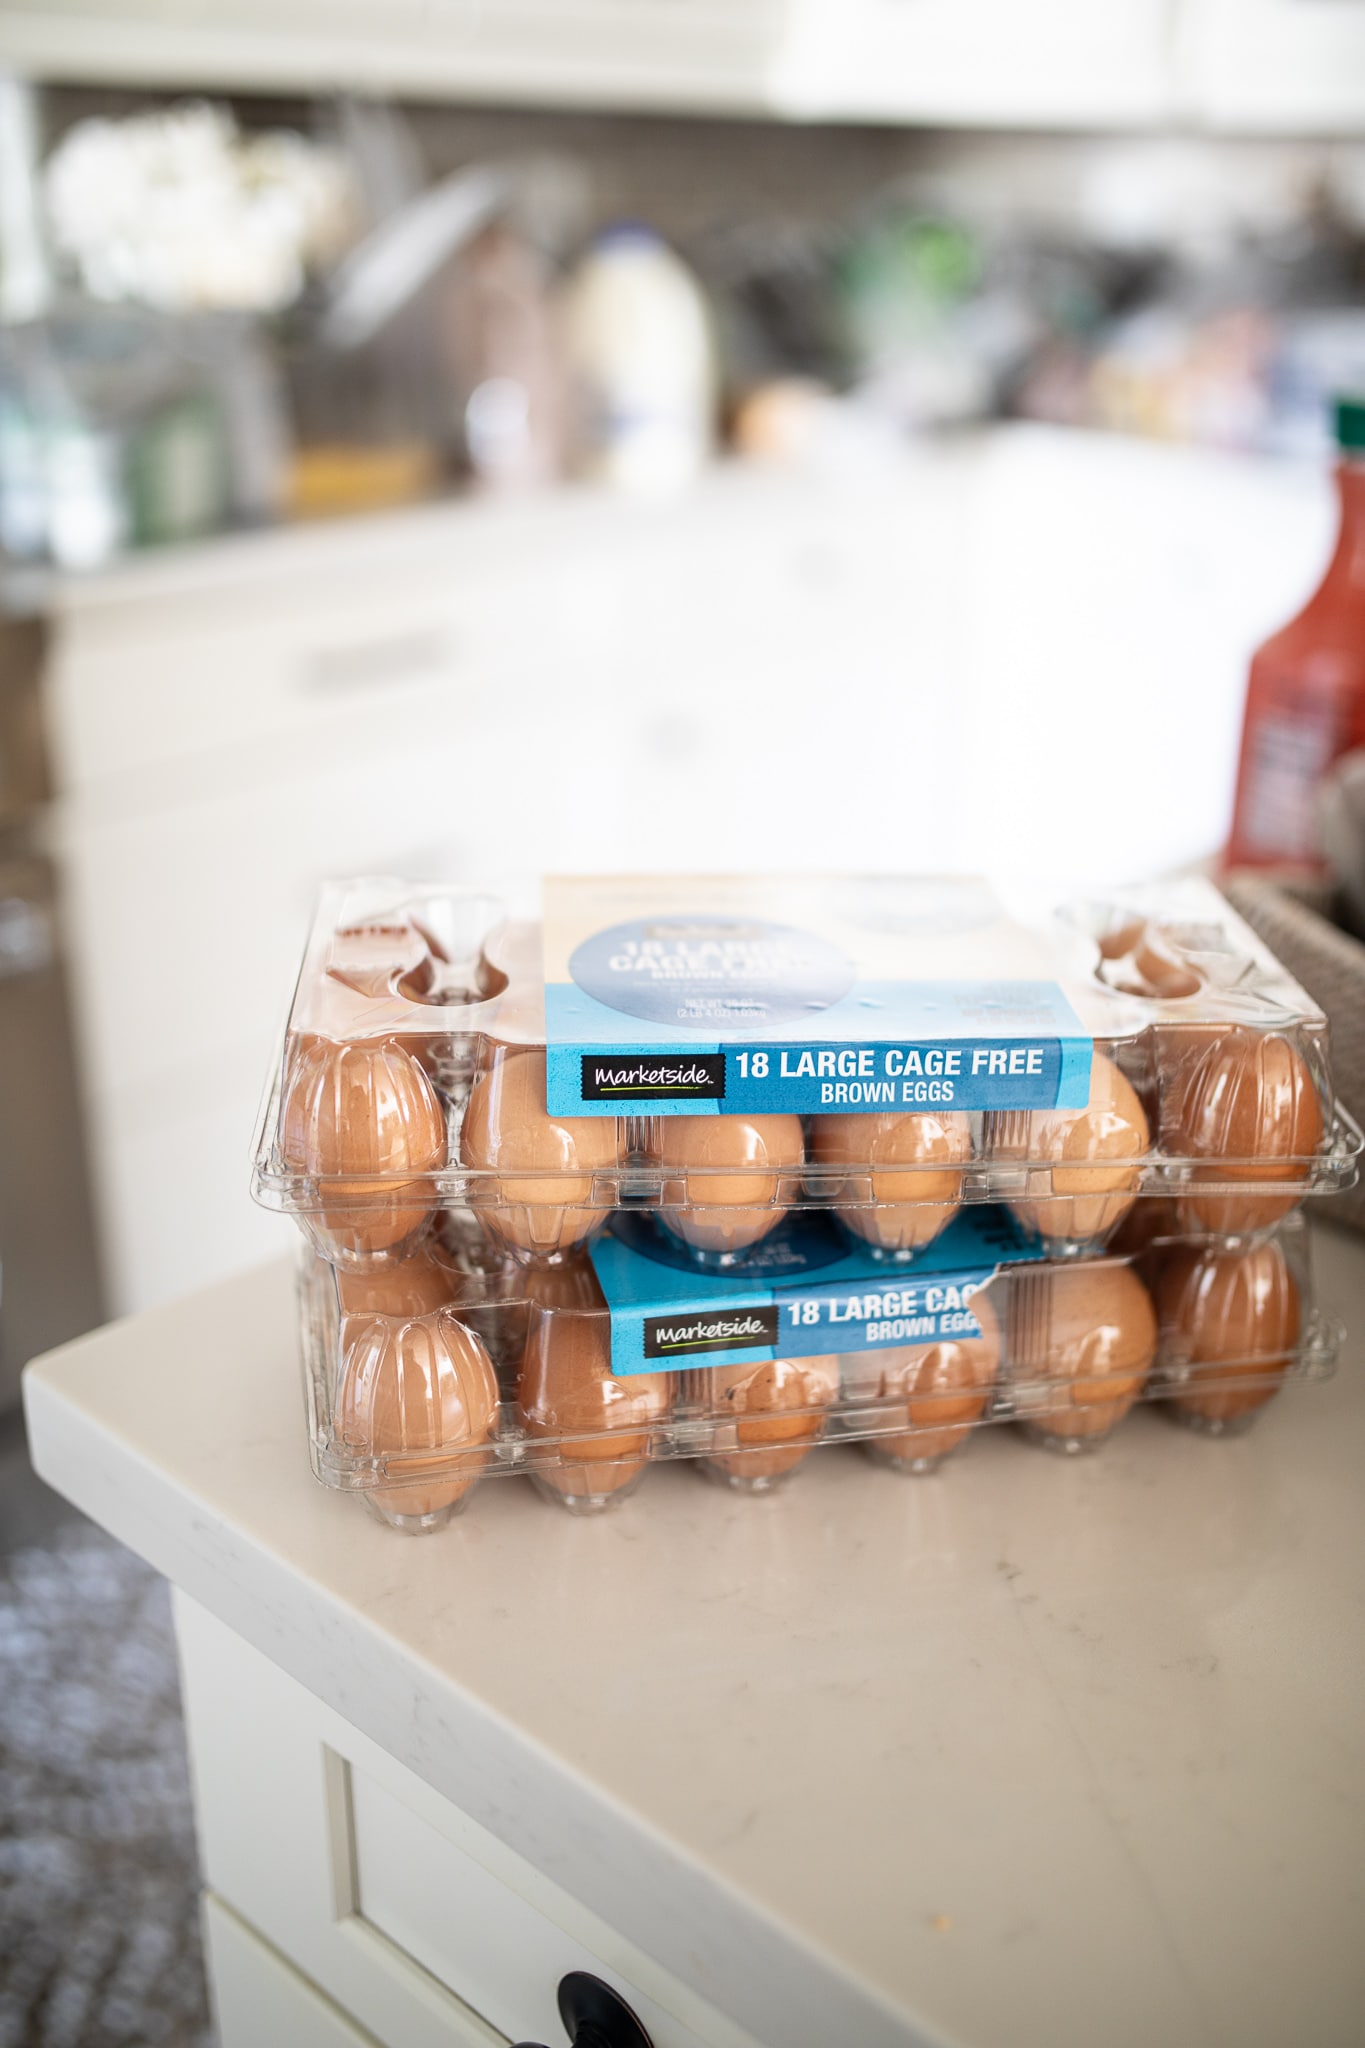 Brown Eggs in the fridge 